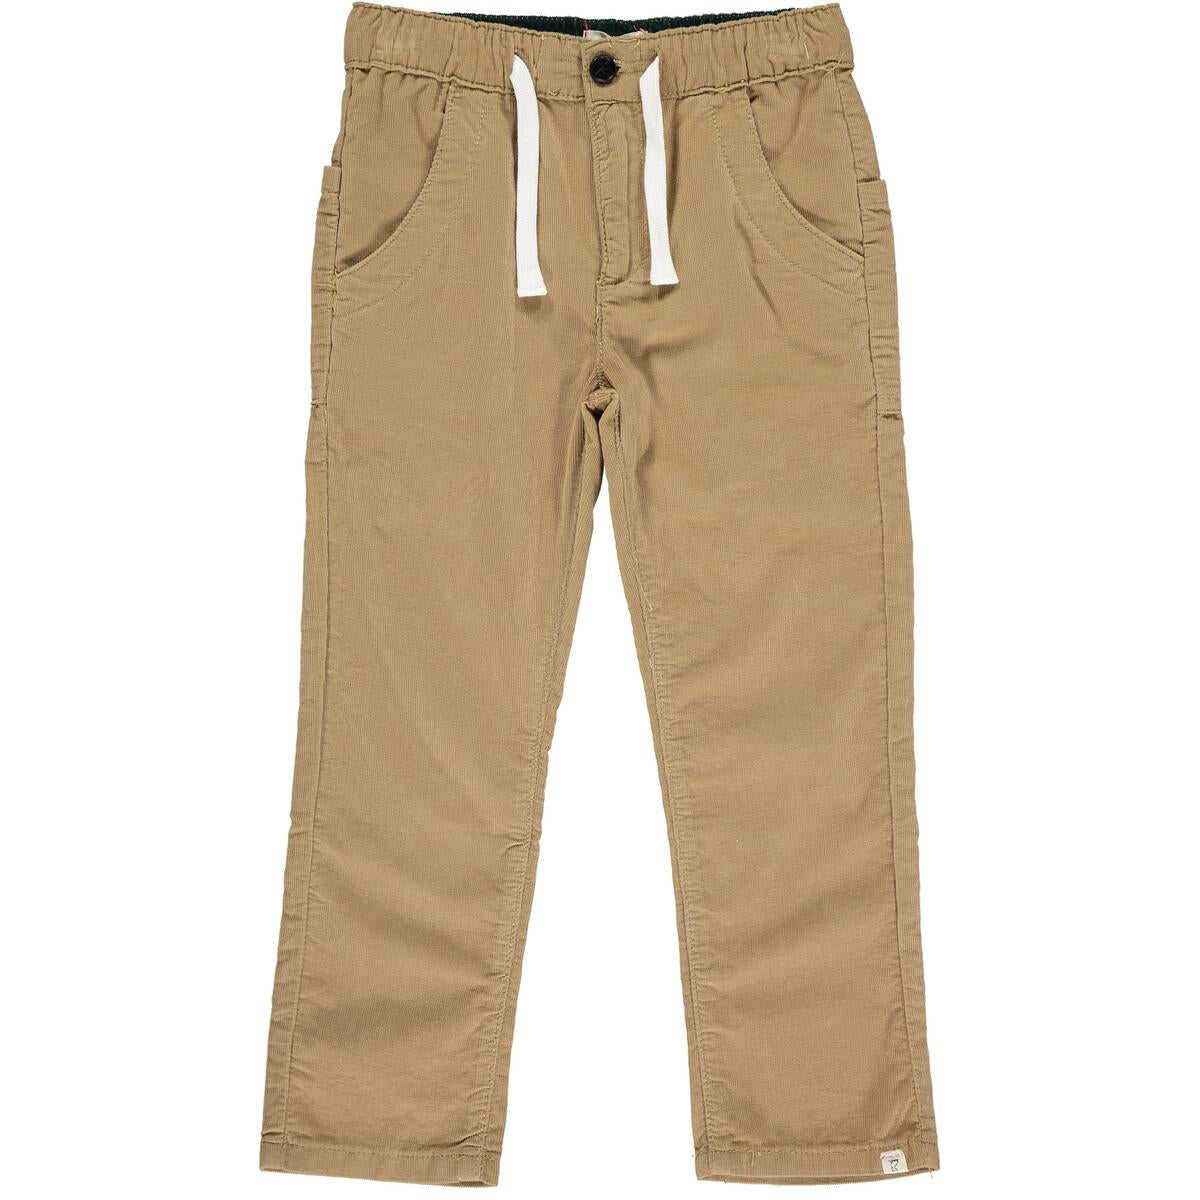 TALLY cord pants-brown